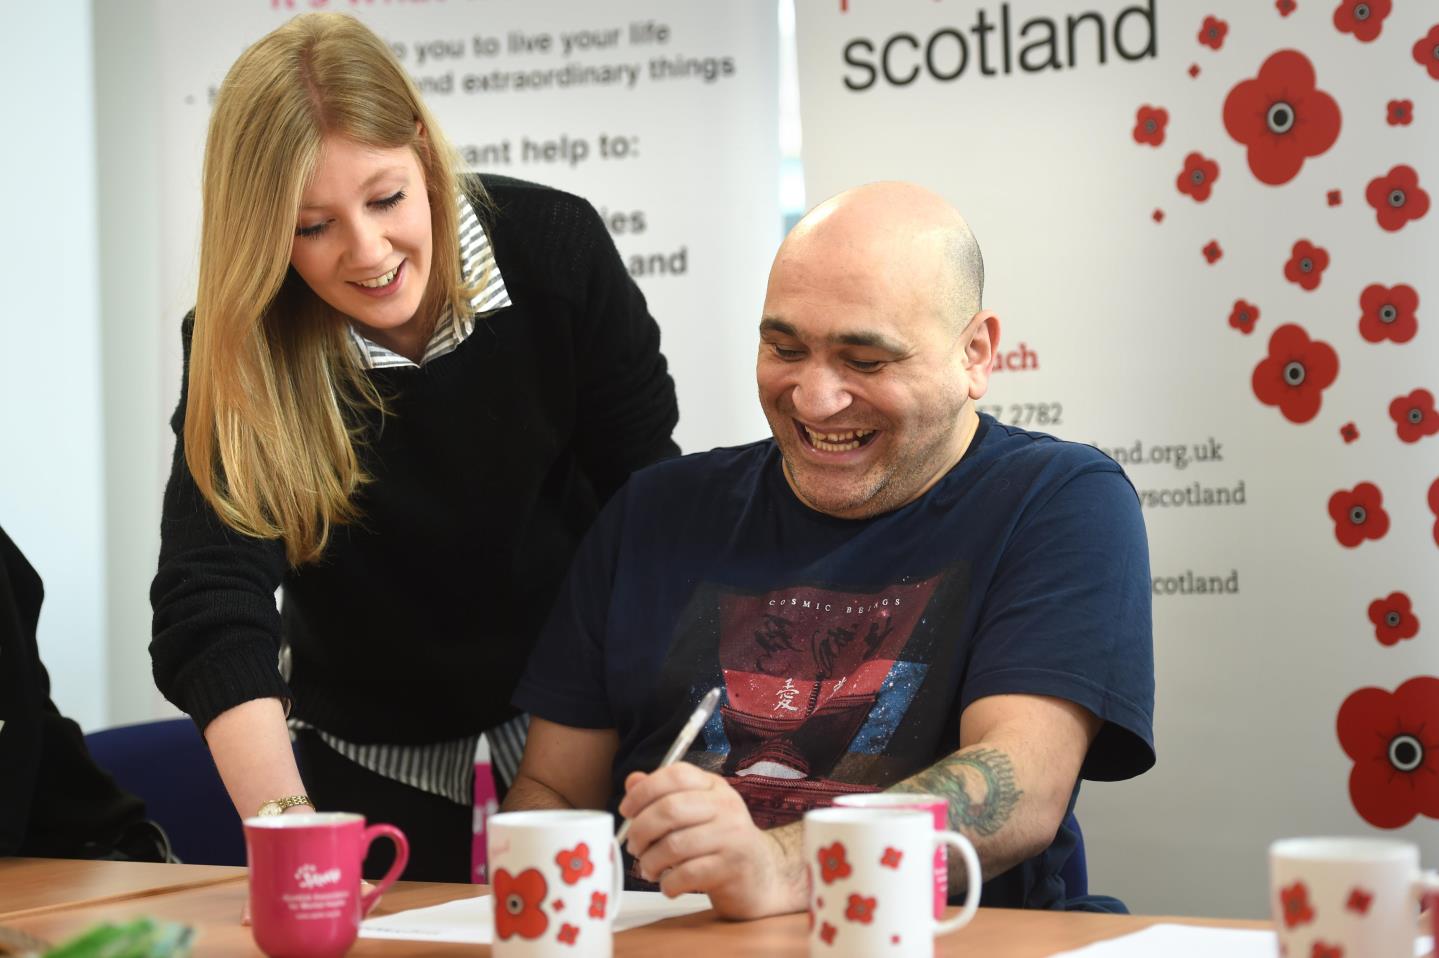 Poppyscotland's welfare services team help veterans' families in Scotland